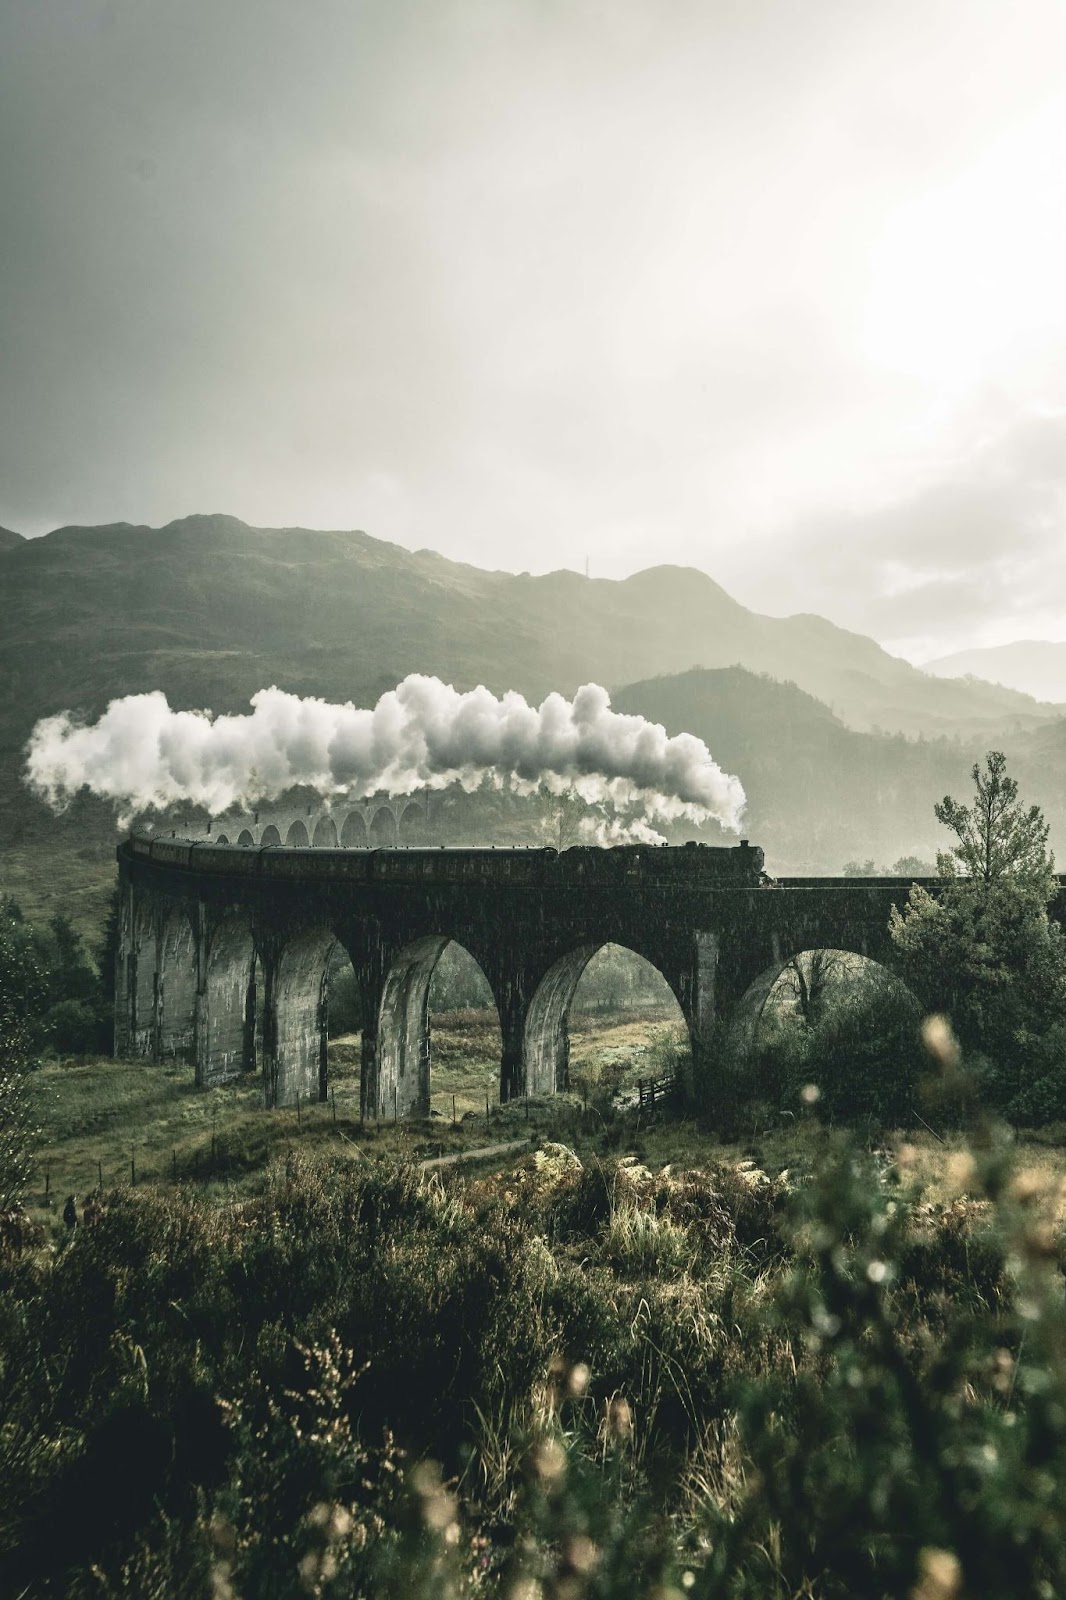 places to visit in West Scotland, Glenfinnan Viaduct, a longest concrete railway bridge in Scotland, Harry Potter filming location